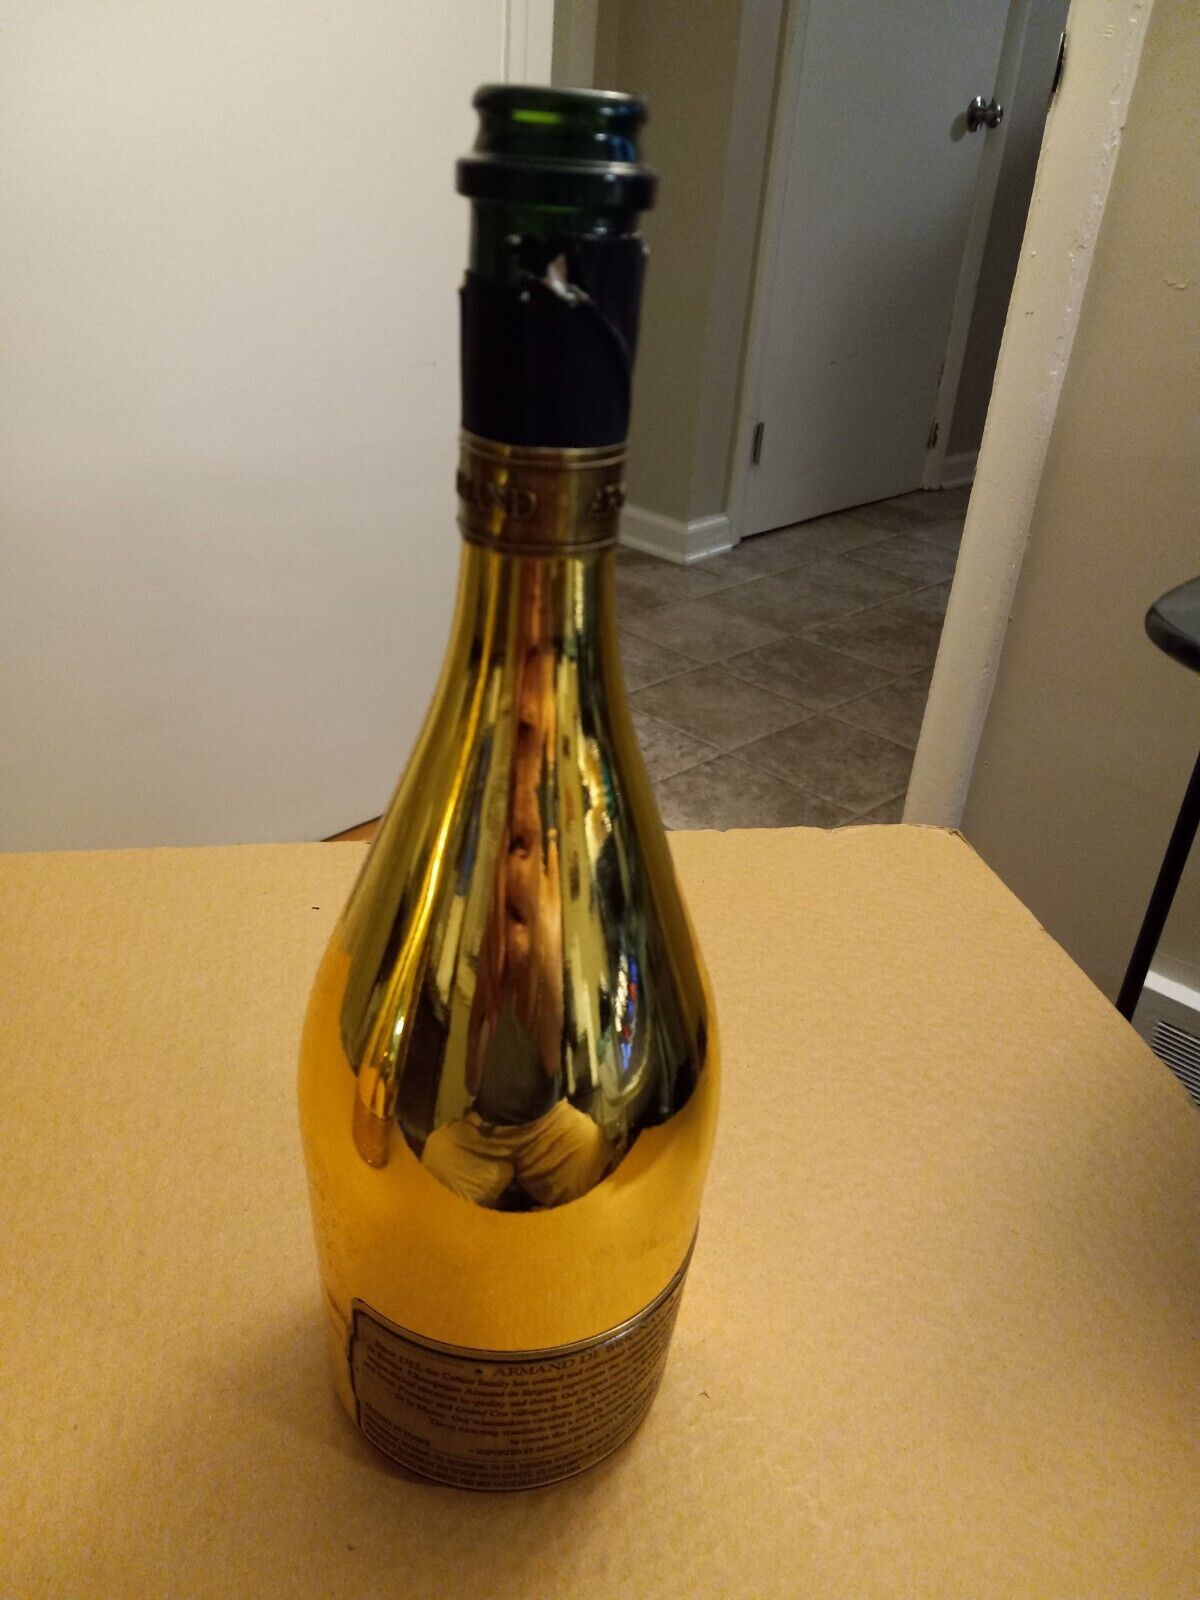 Ace Of Spades Champagne Empty 750ml Bottle 